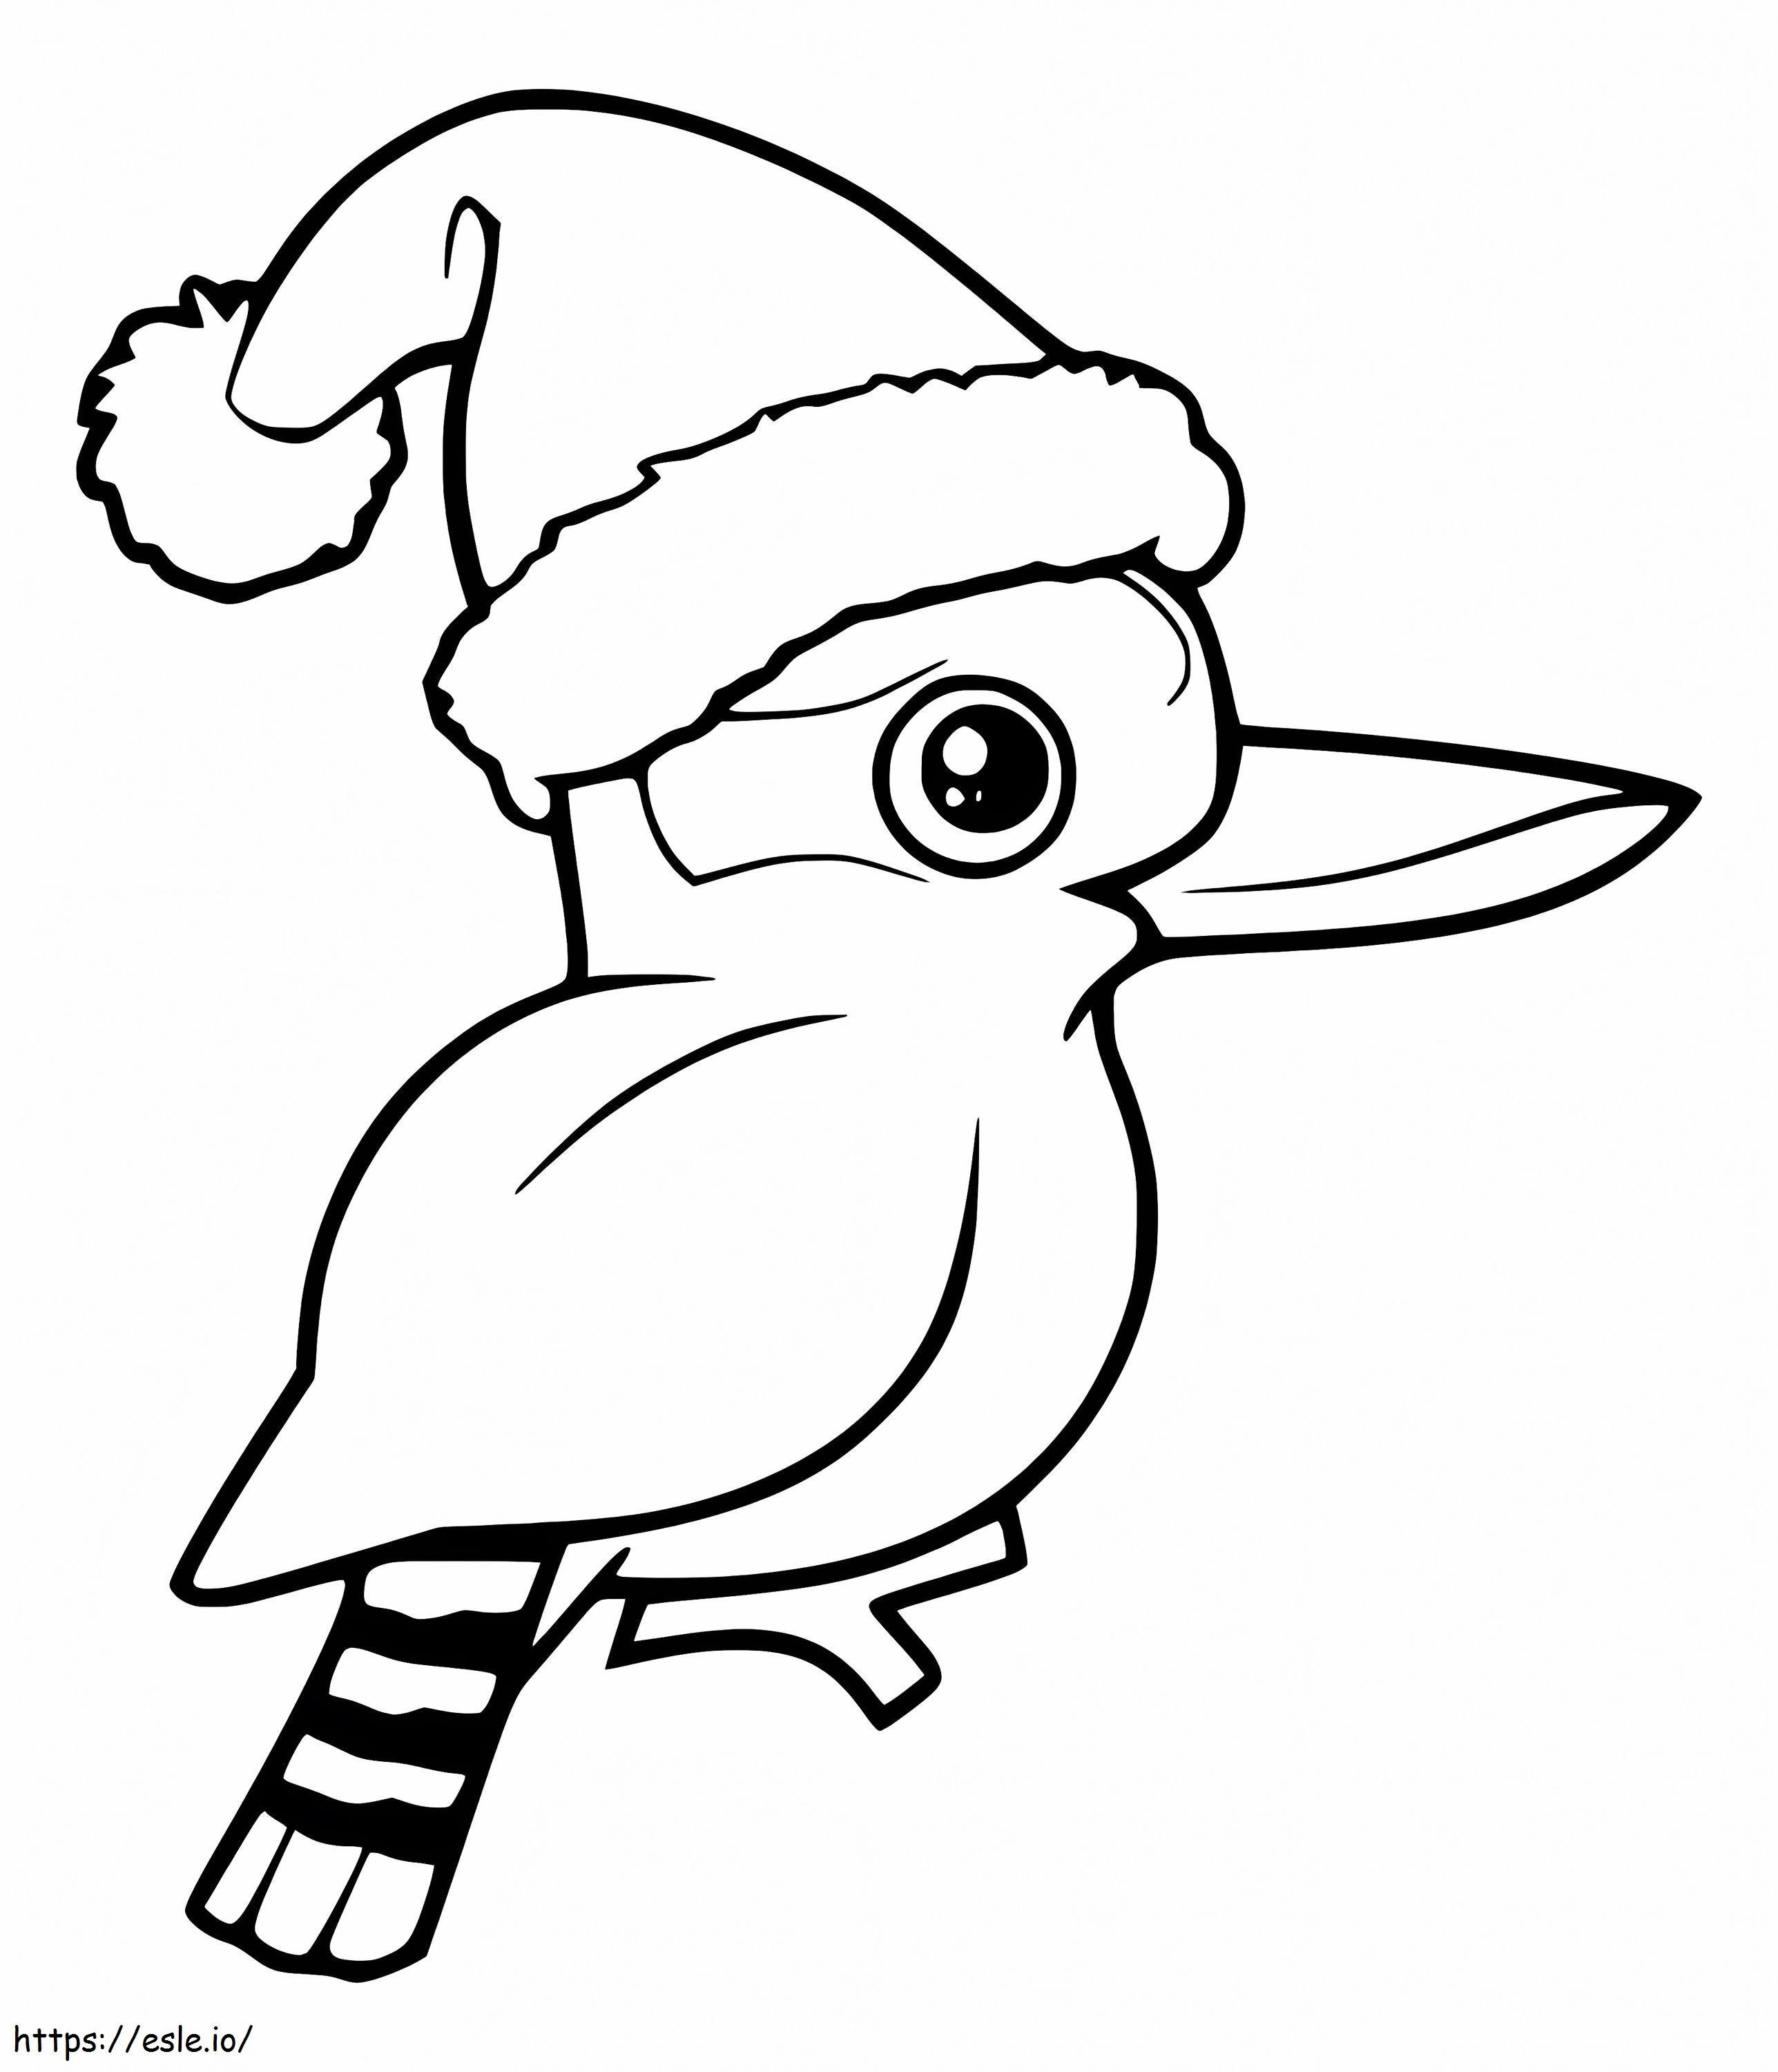 Christmas Kookaburra coloring page